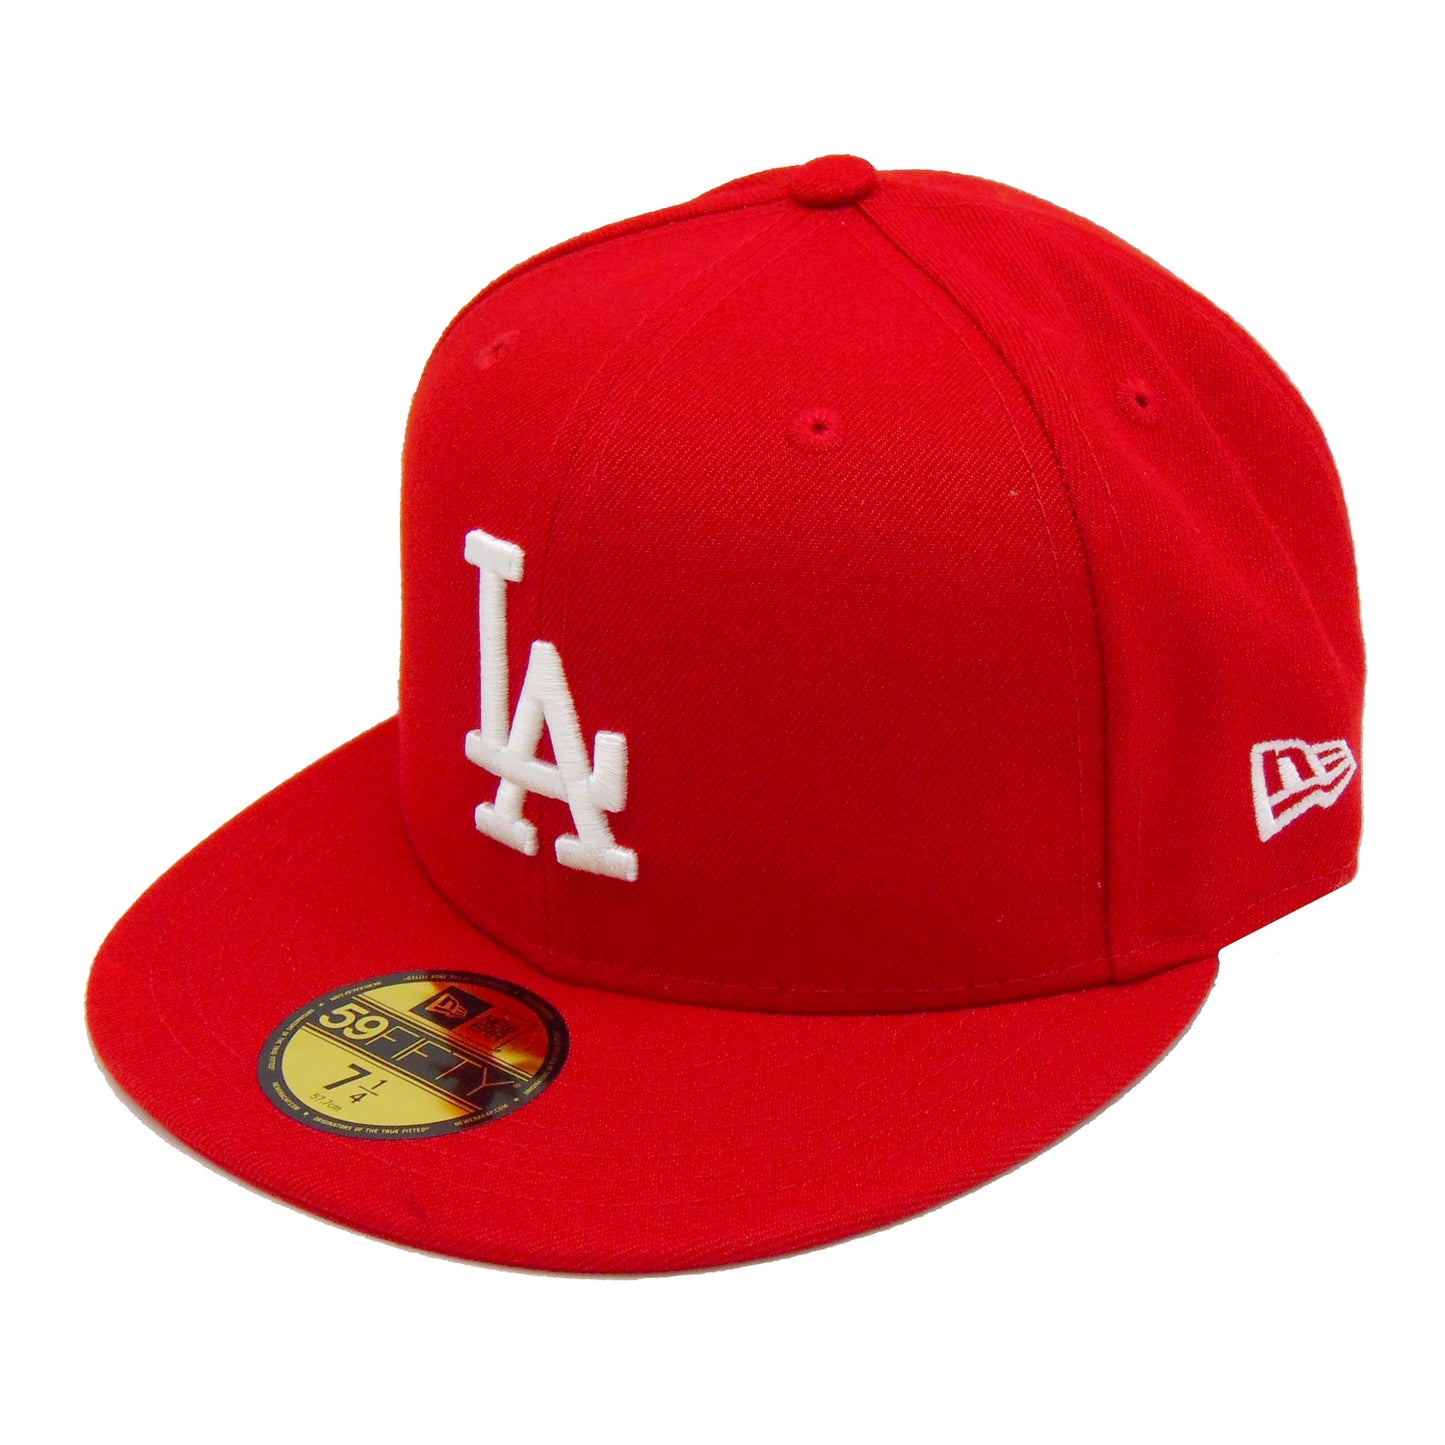 Los Angeles Dodgers Basic New Era Cap Red White